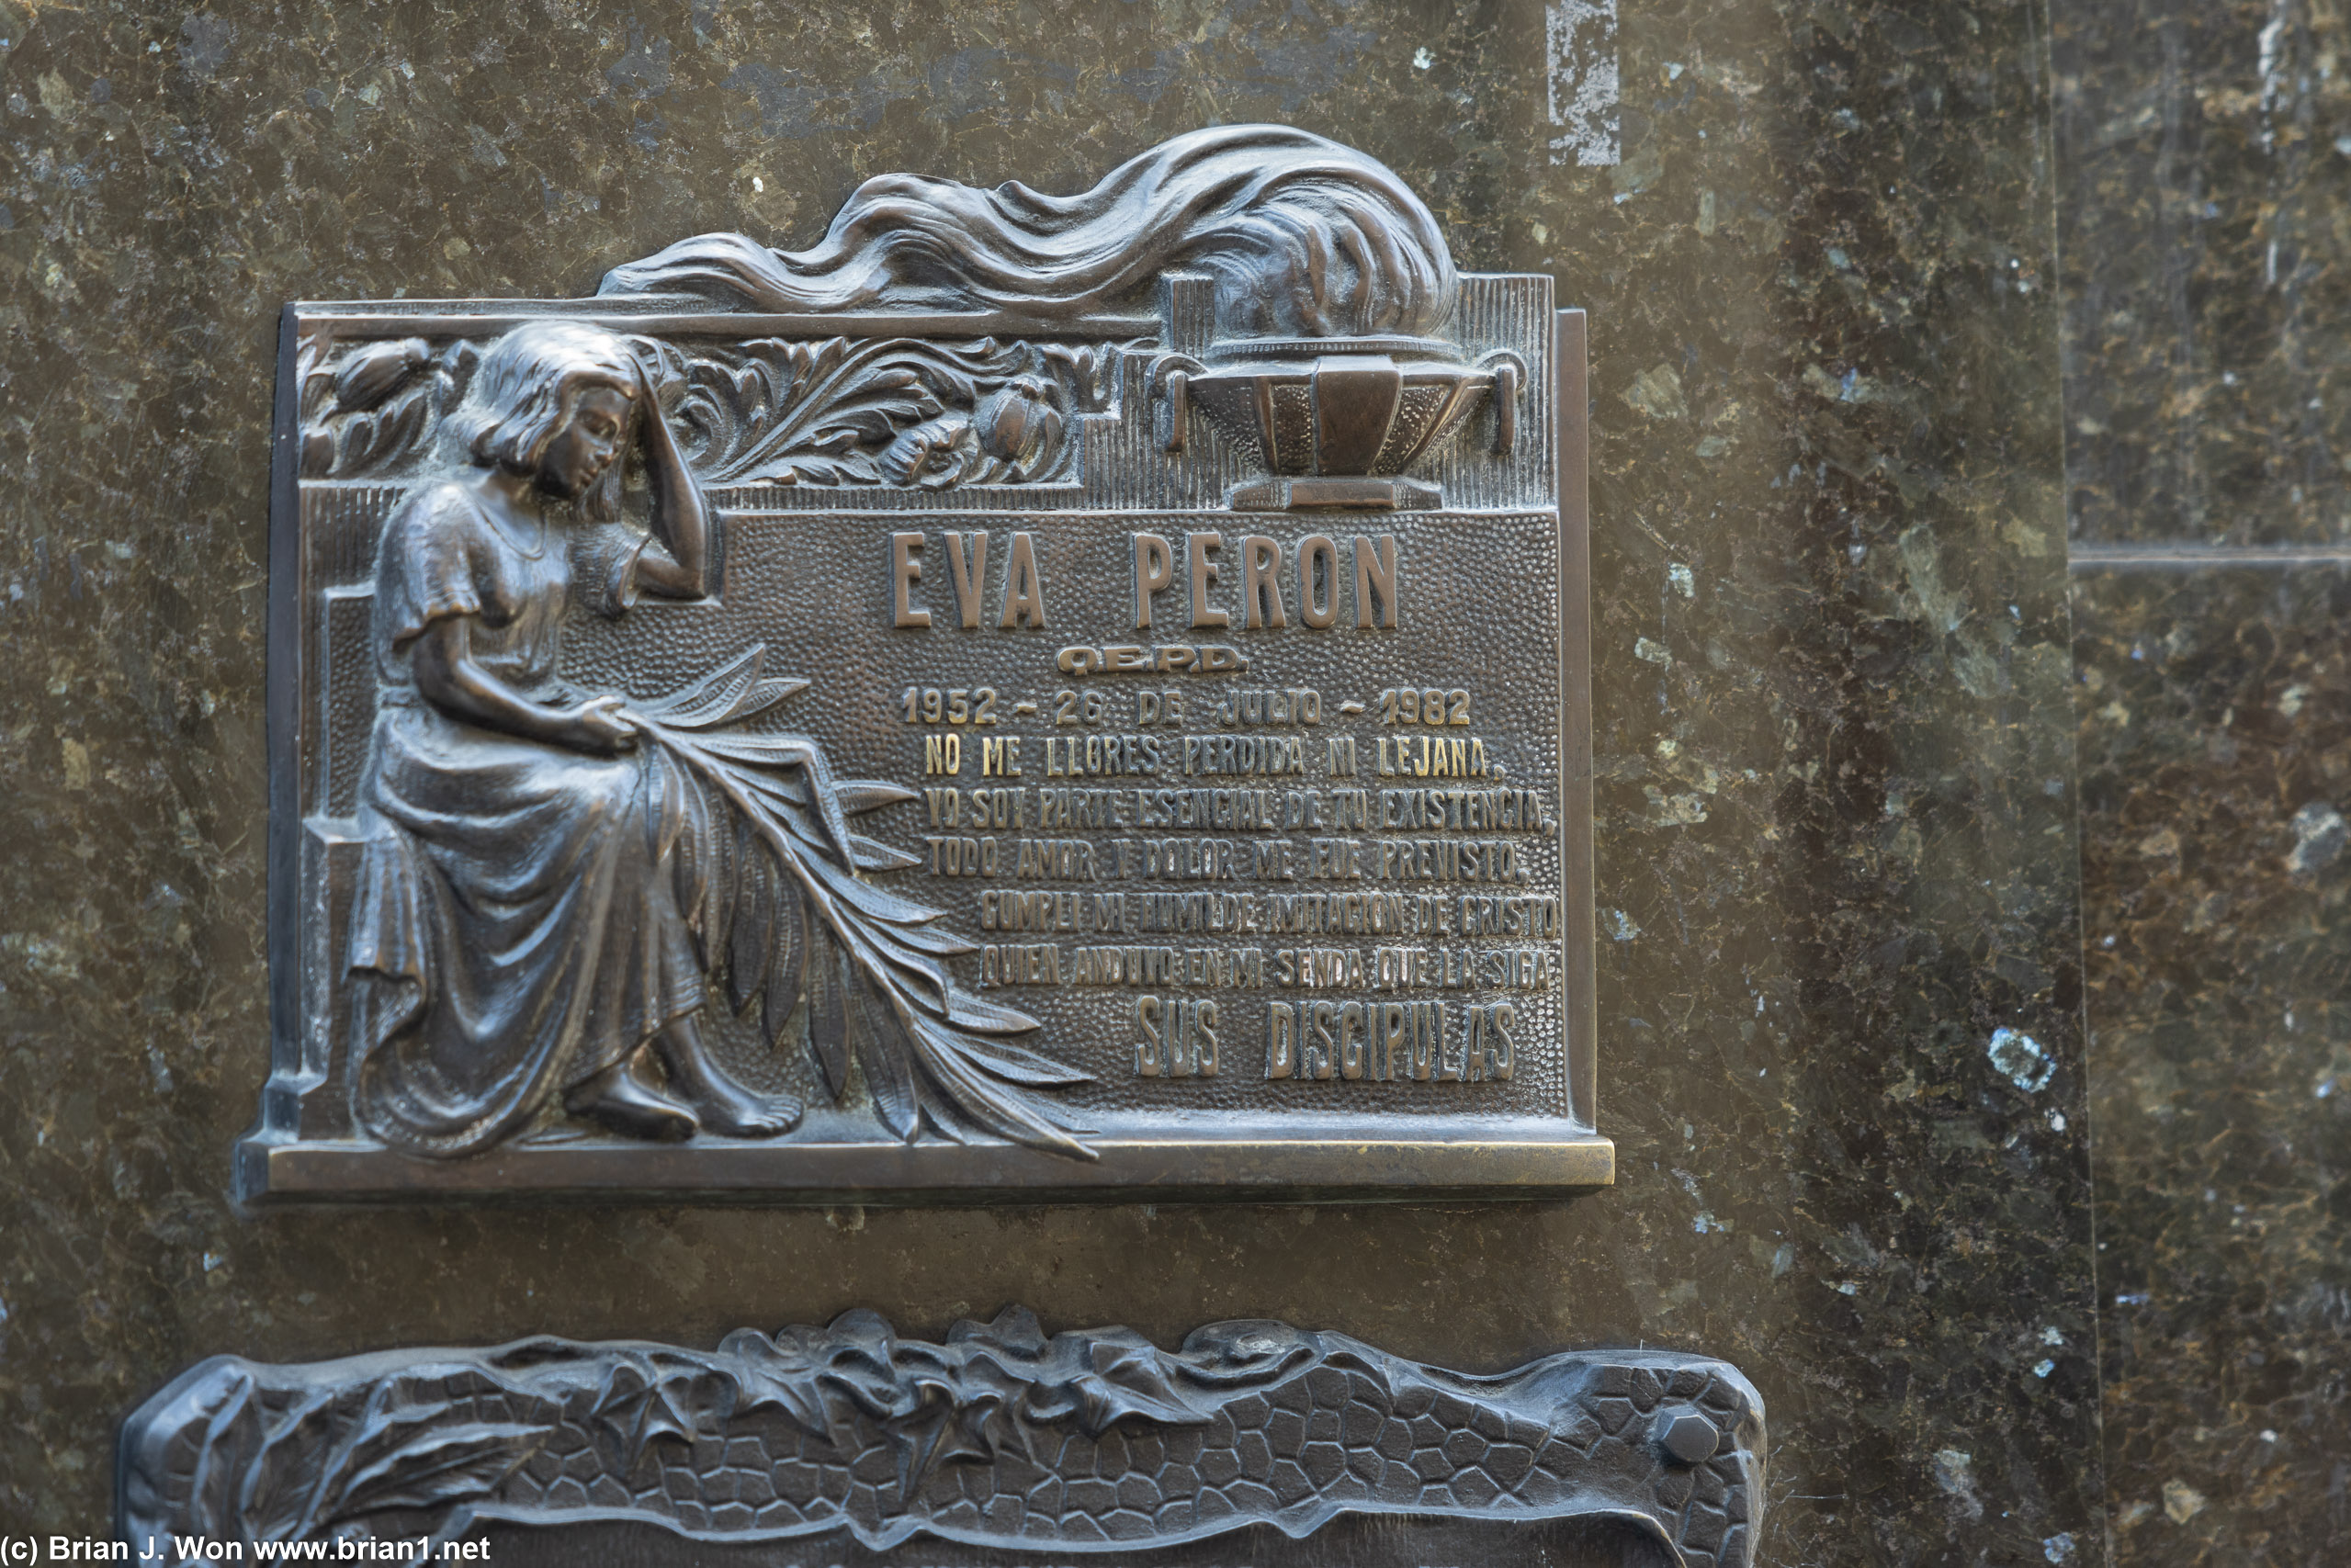 The crypt where Eva Peron is buried.